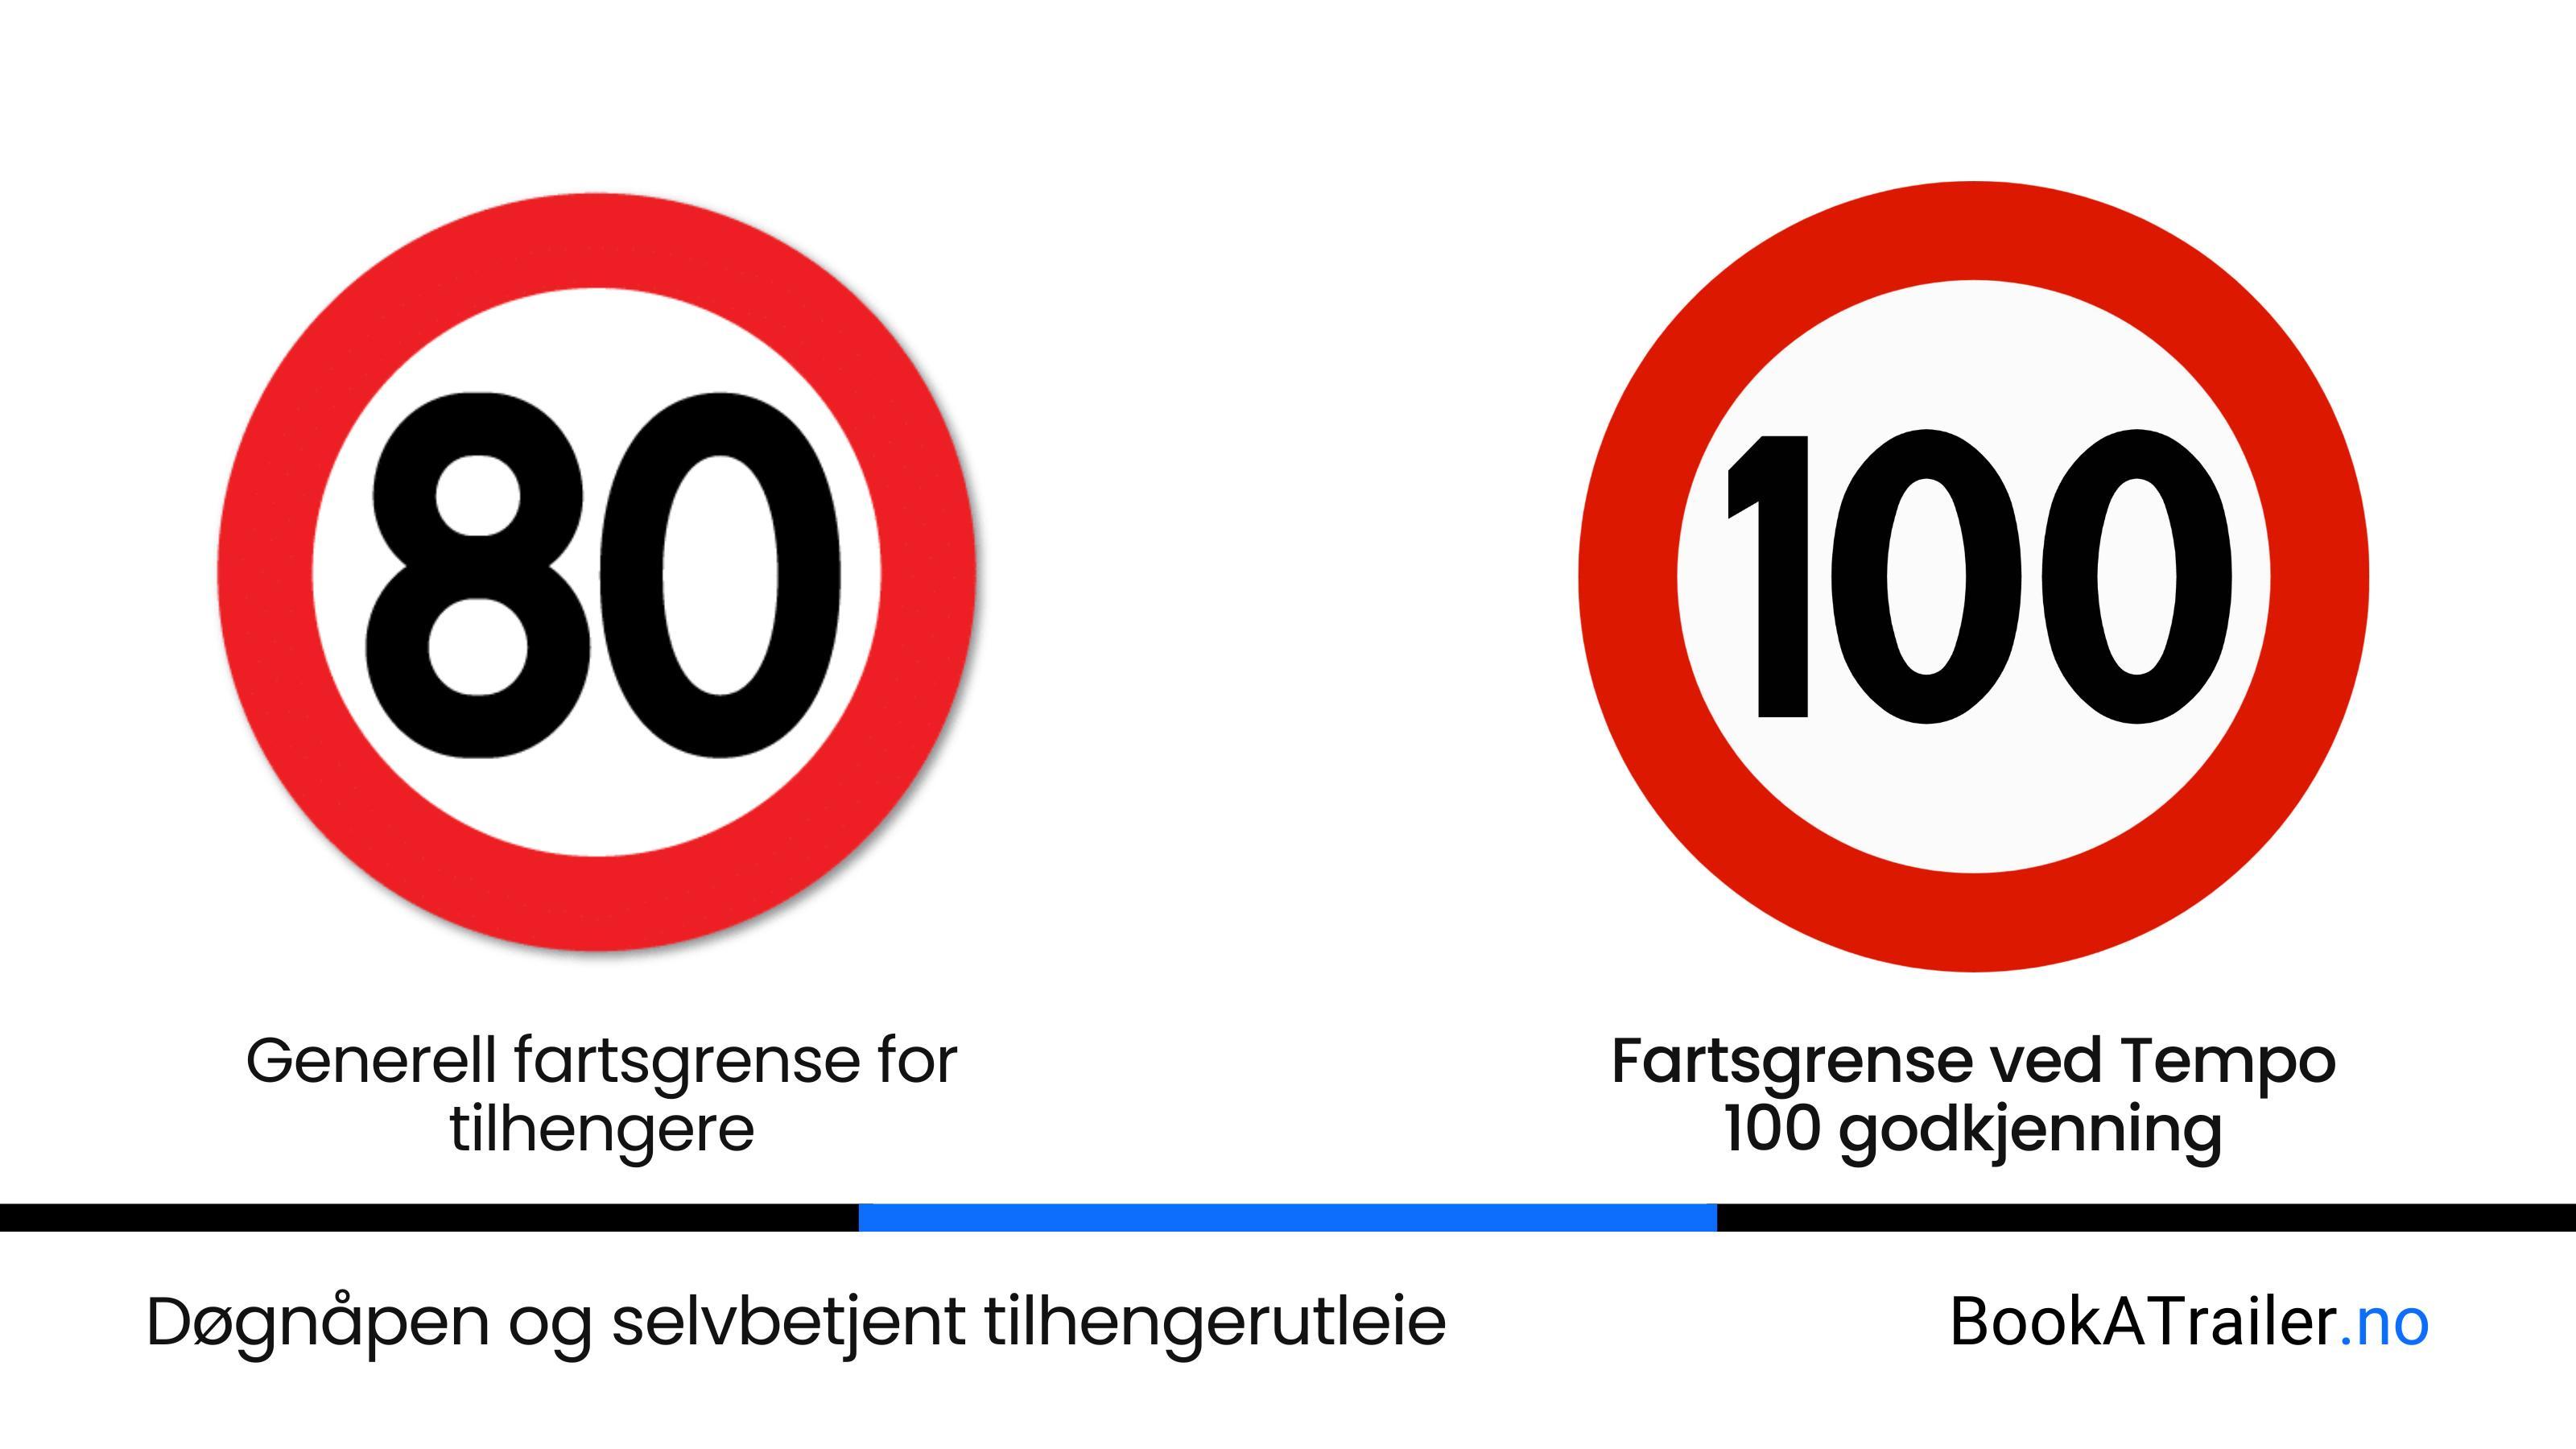 Fartsgrense for tilhengere i Norge